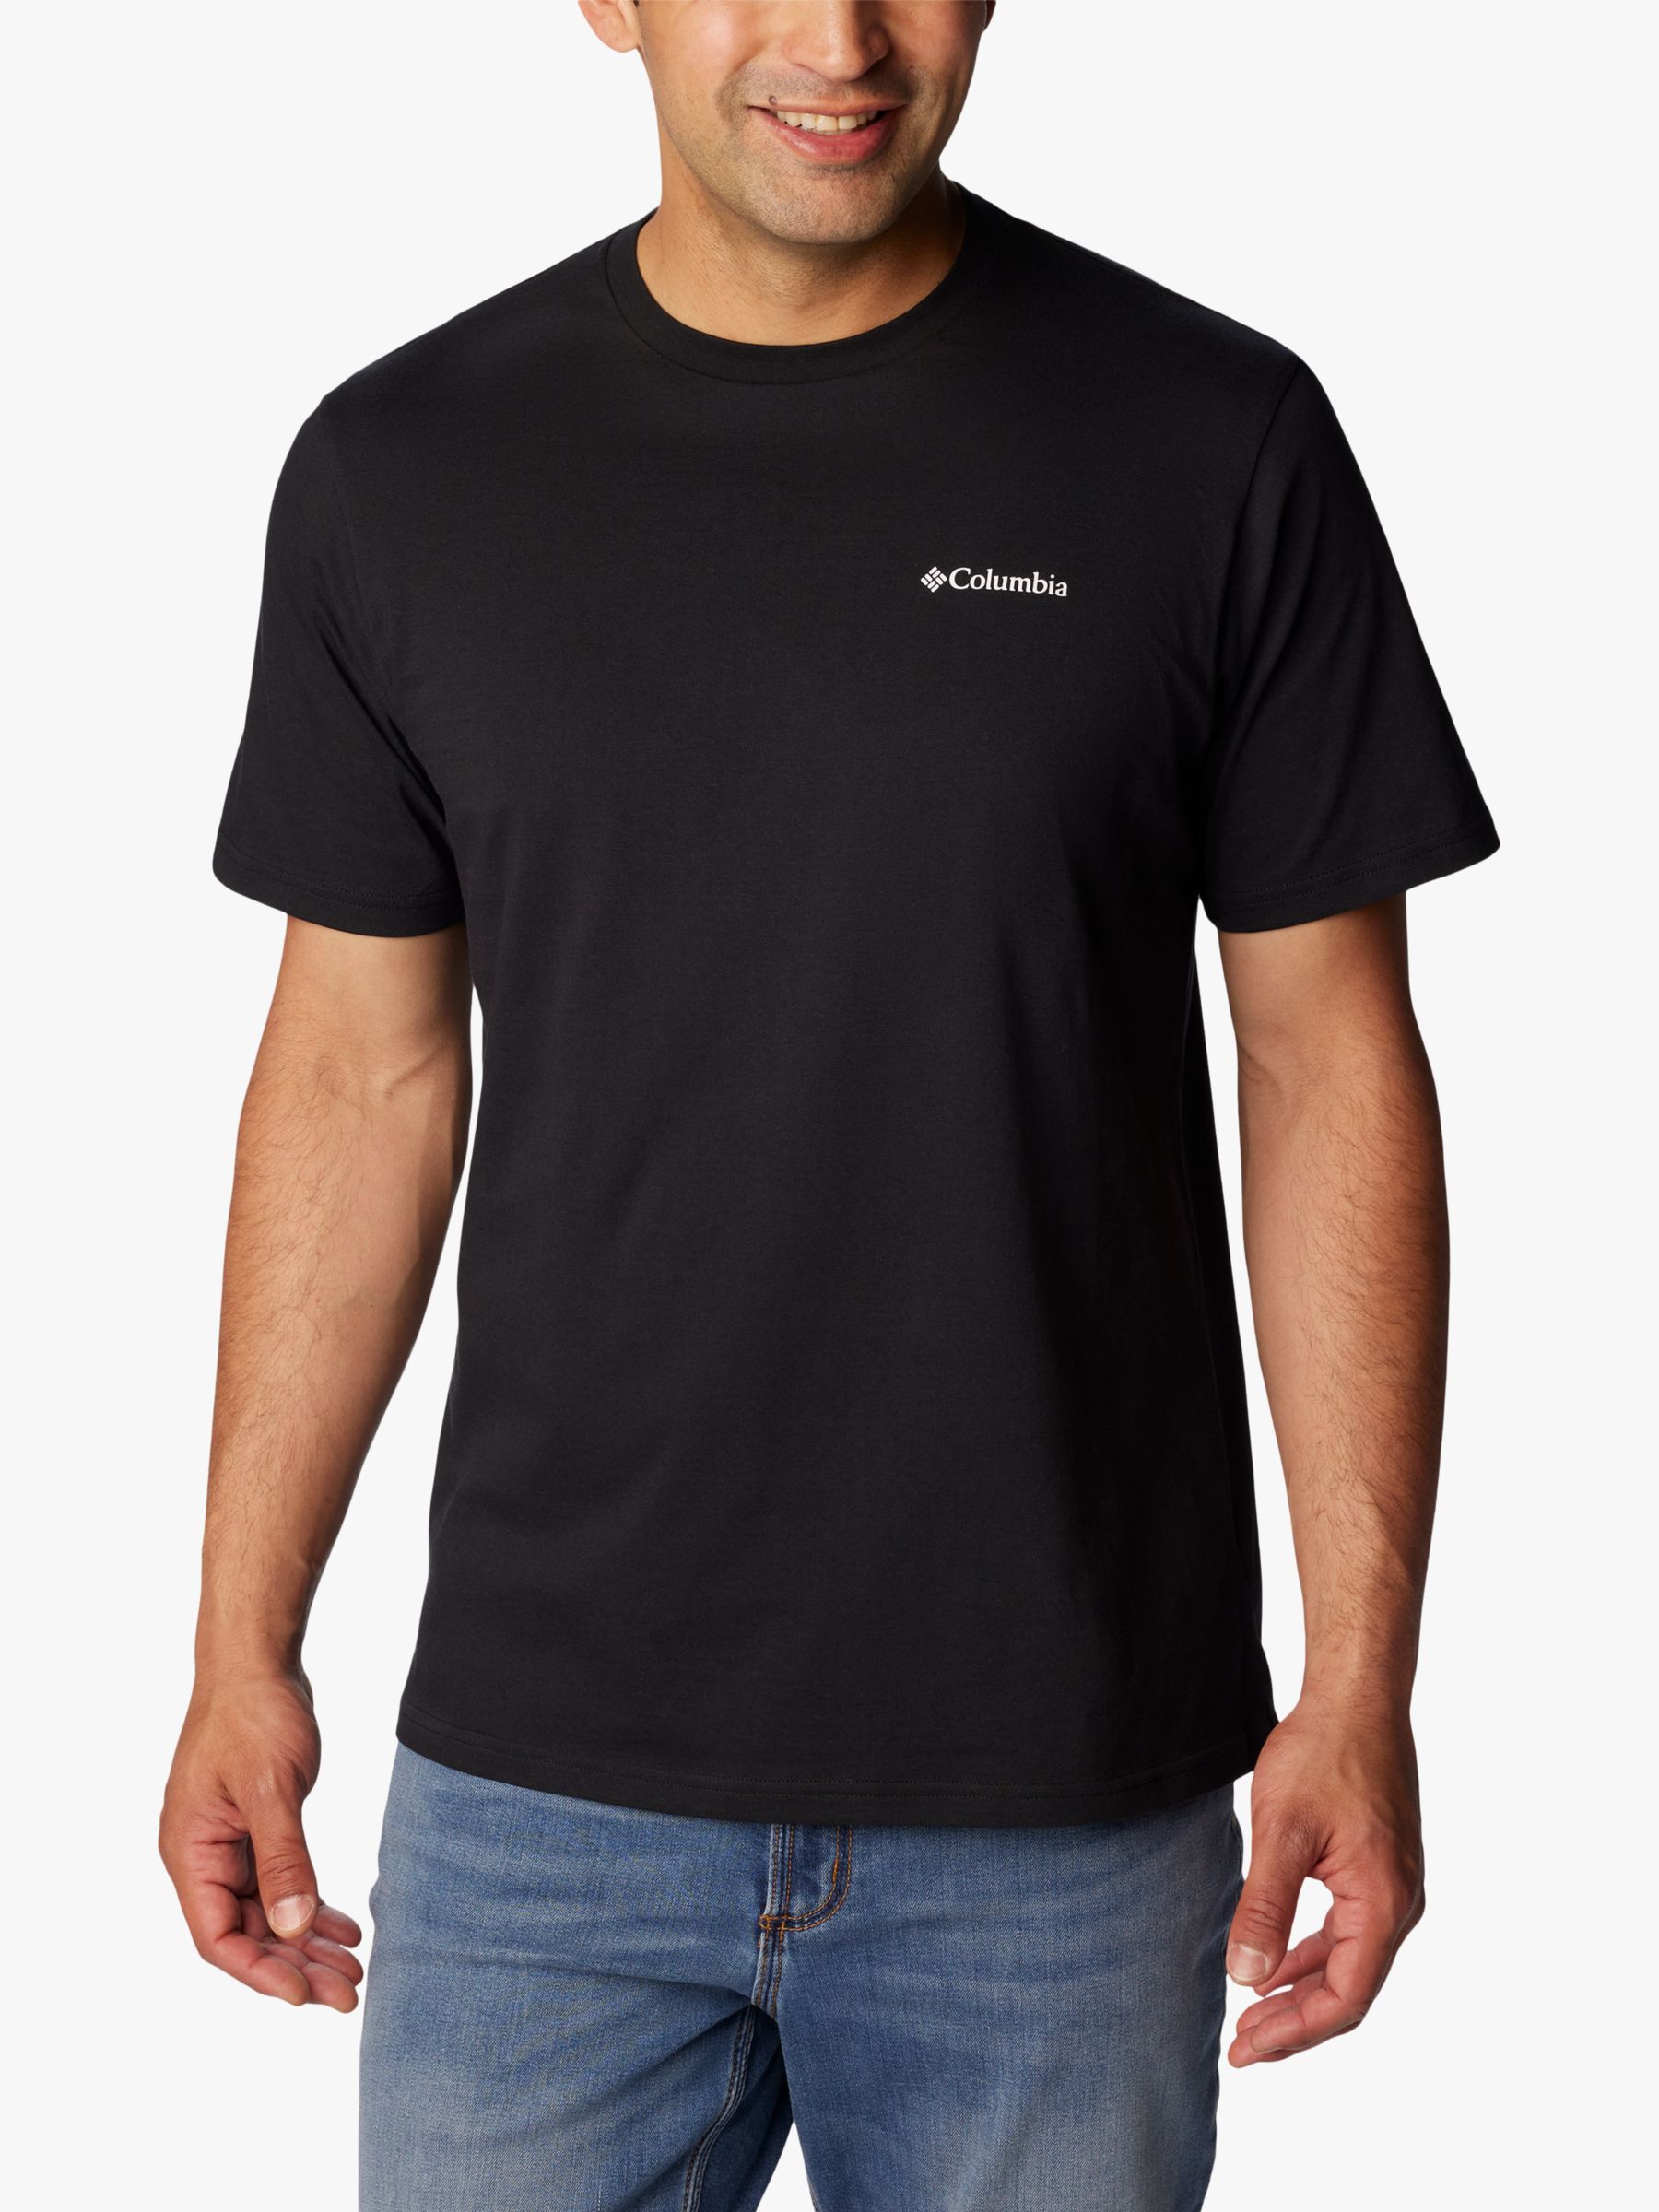 Columbia North Cascades Cotton T-shirt, Black, XL